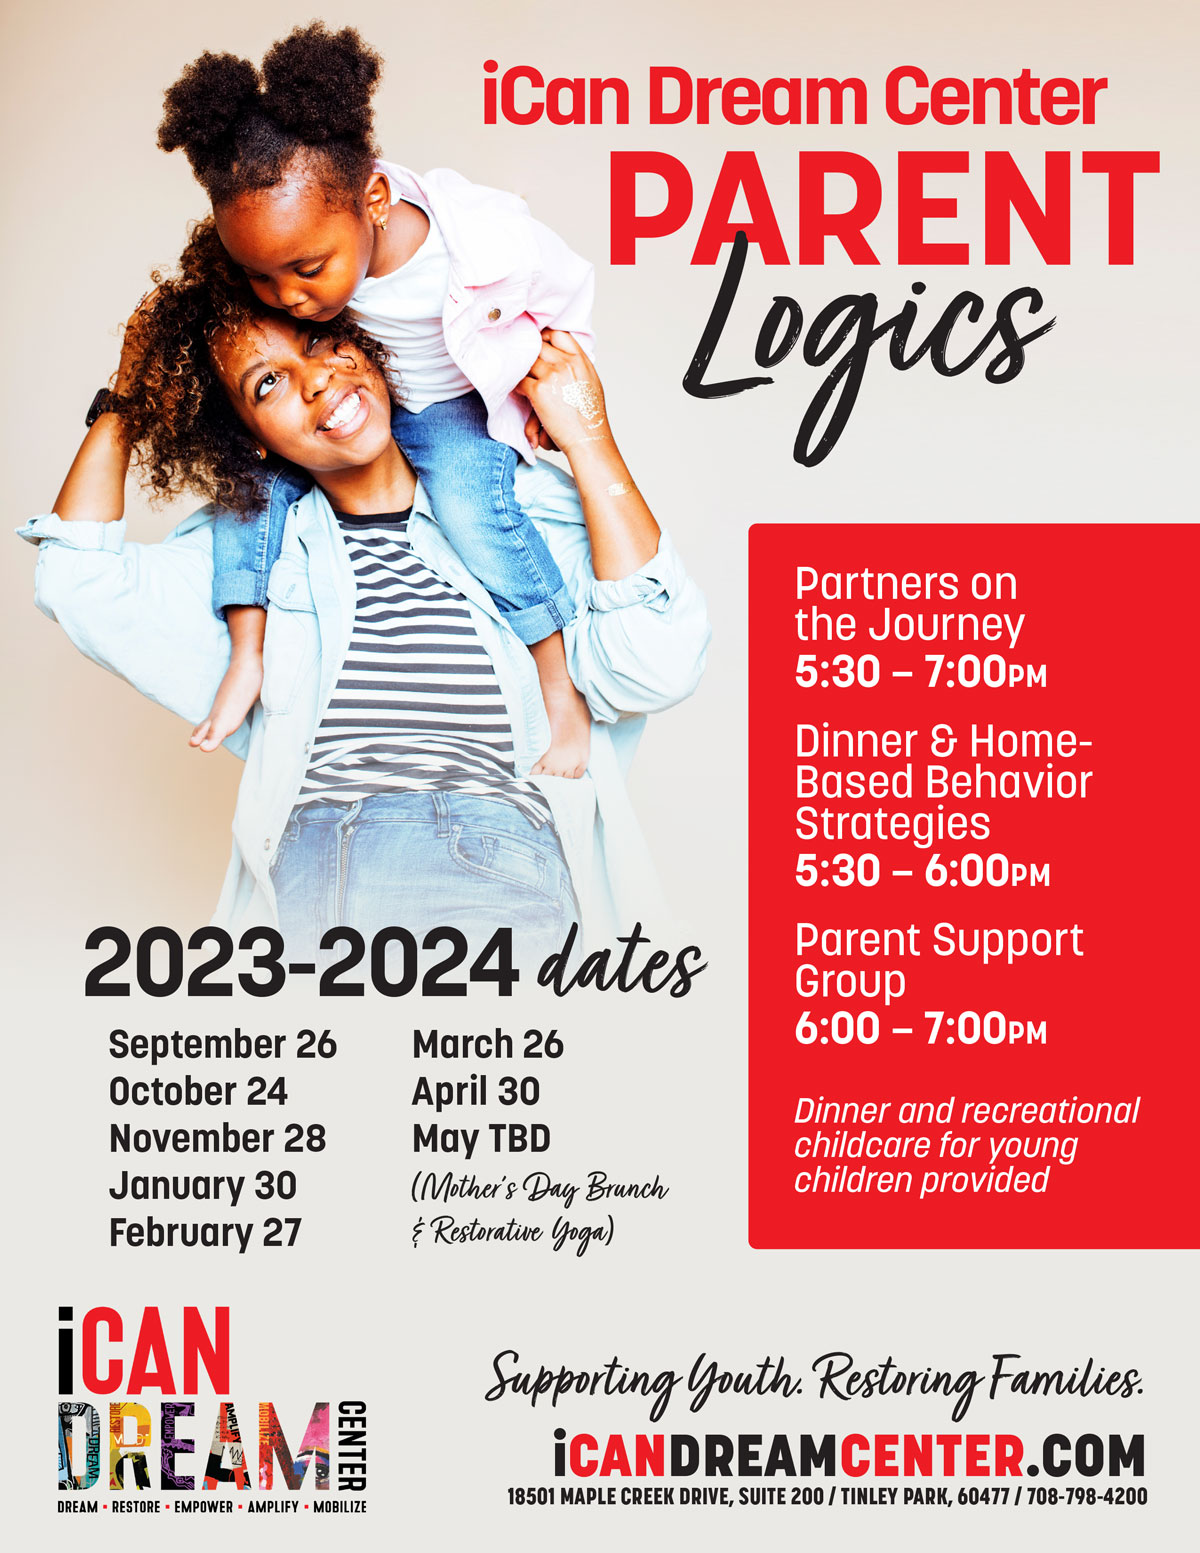 iCan Dream Center Parent Logics (Oct. 24)